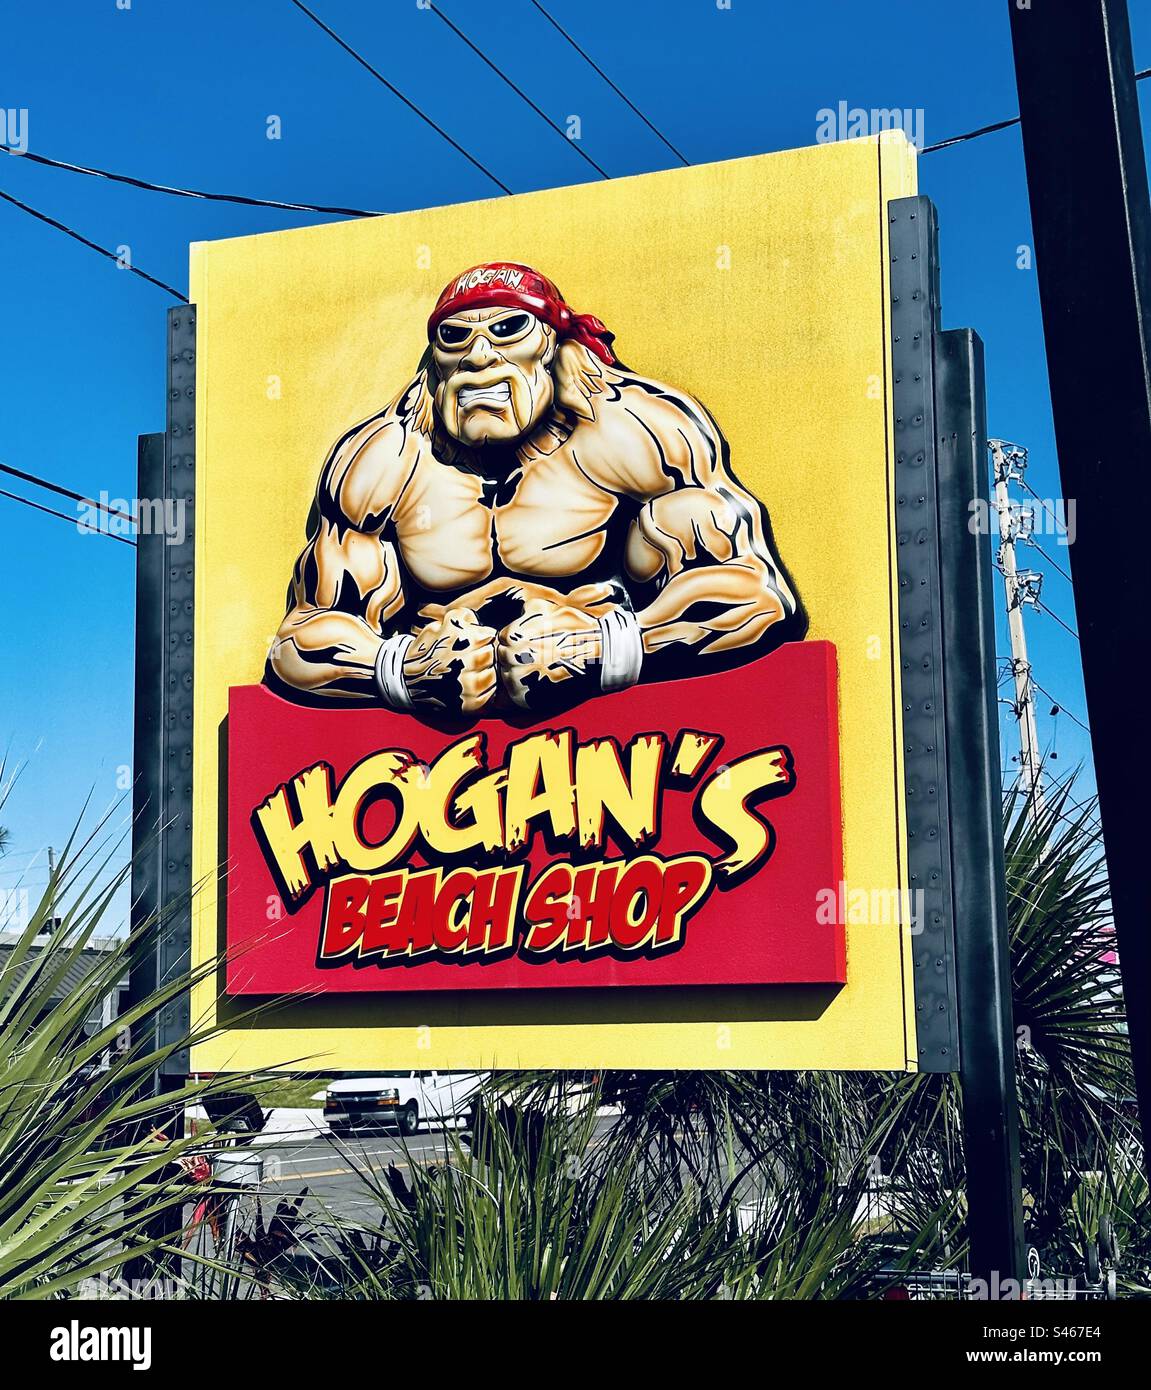 Hogans Beach Shop Sign International Drive Orlando Florida Stock Photo